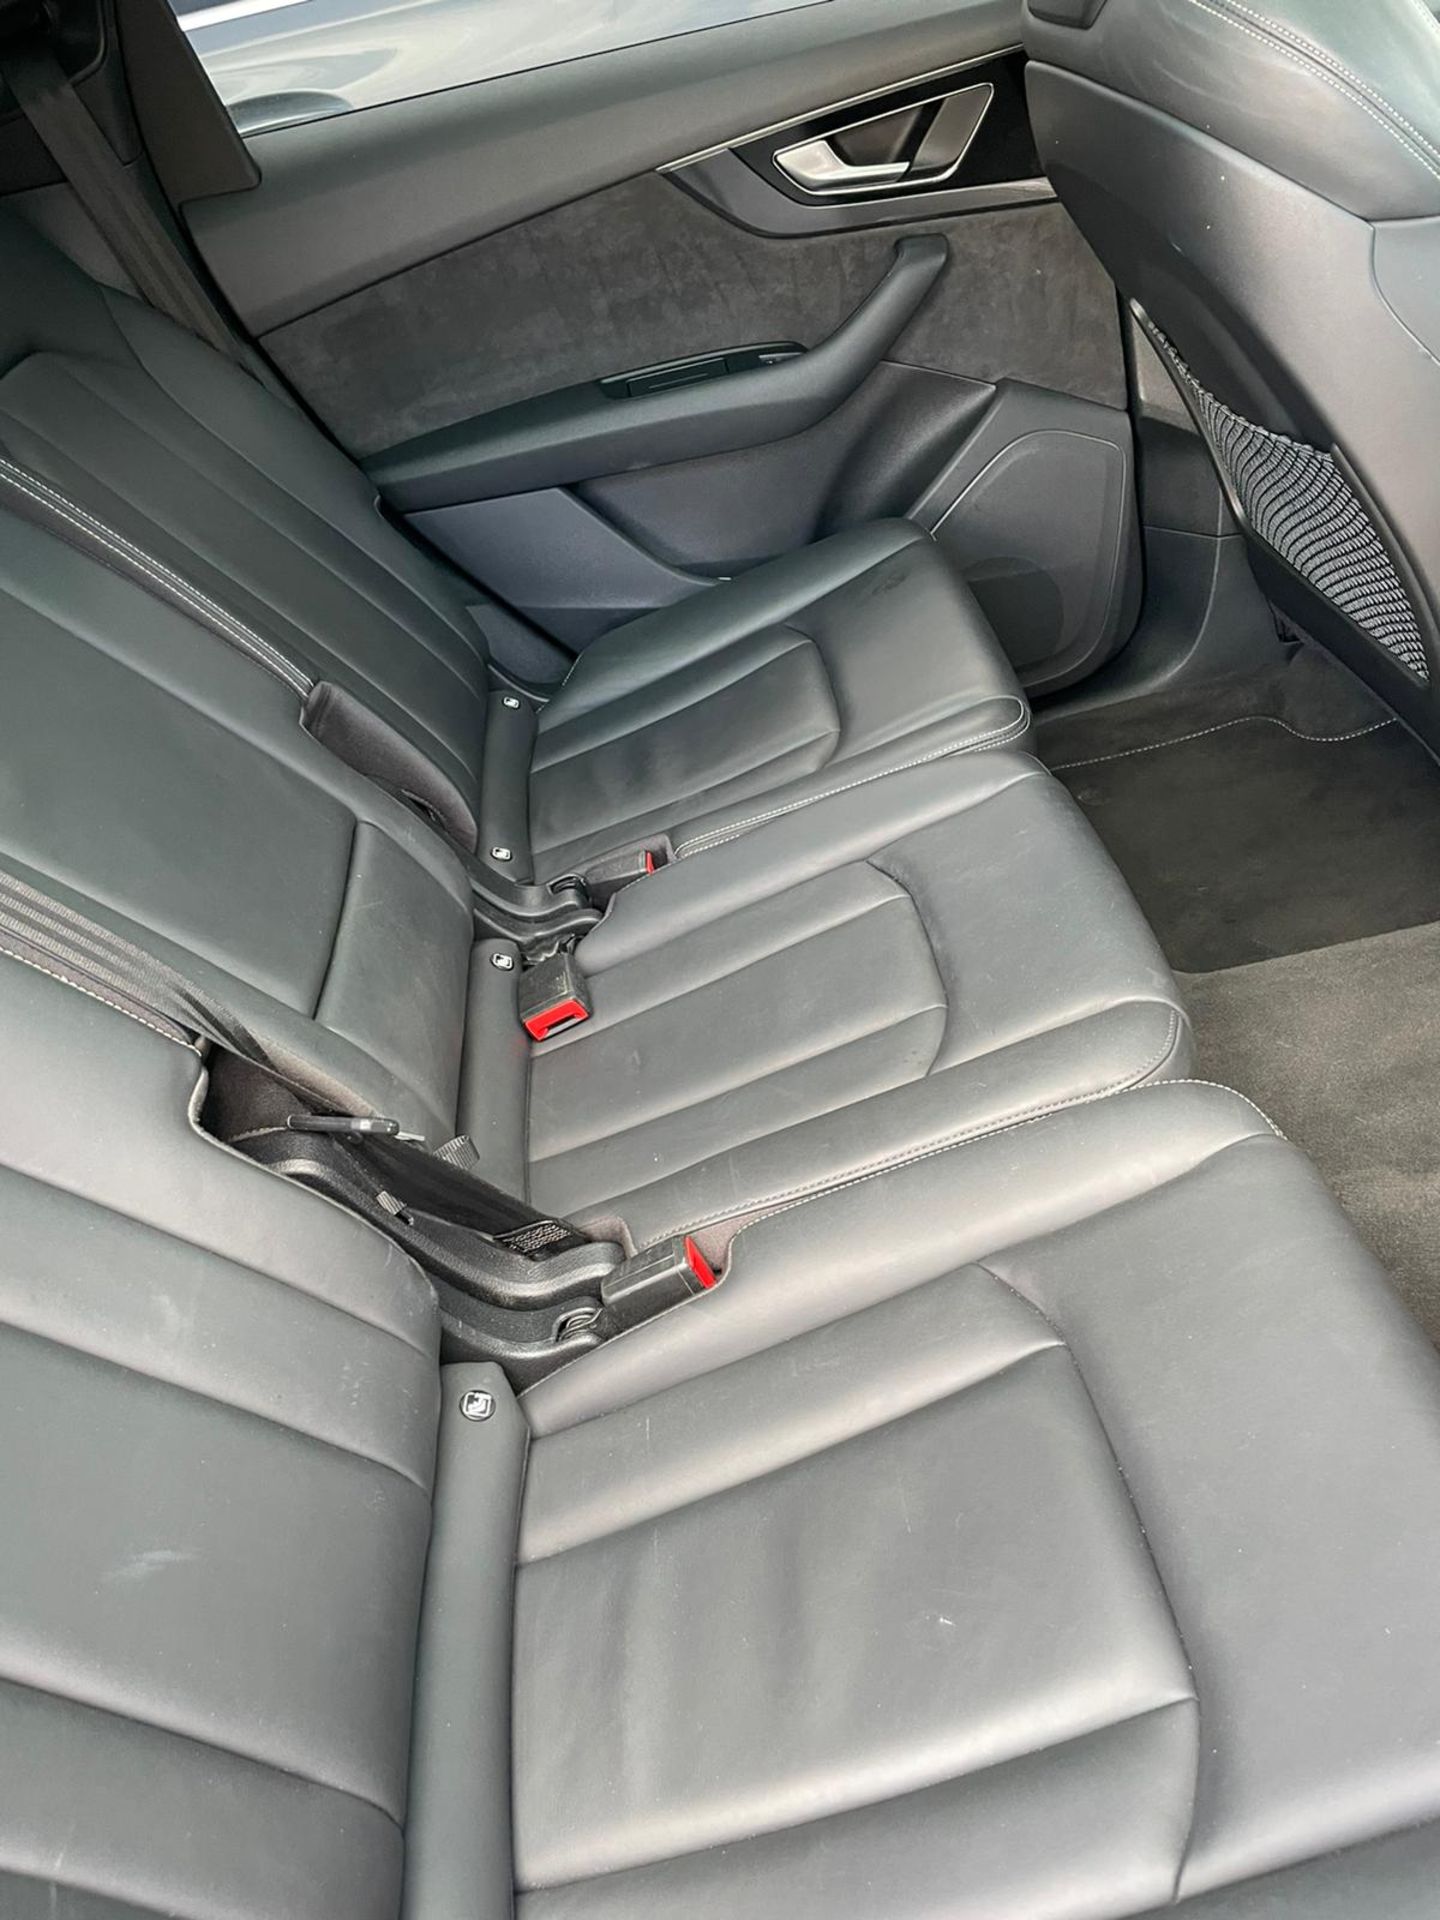 2019 Audi Q7 Black edition. LOW BUYERS PREMIUM of 8% - Image 10 of 18